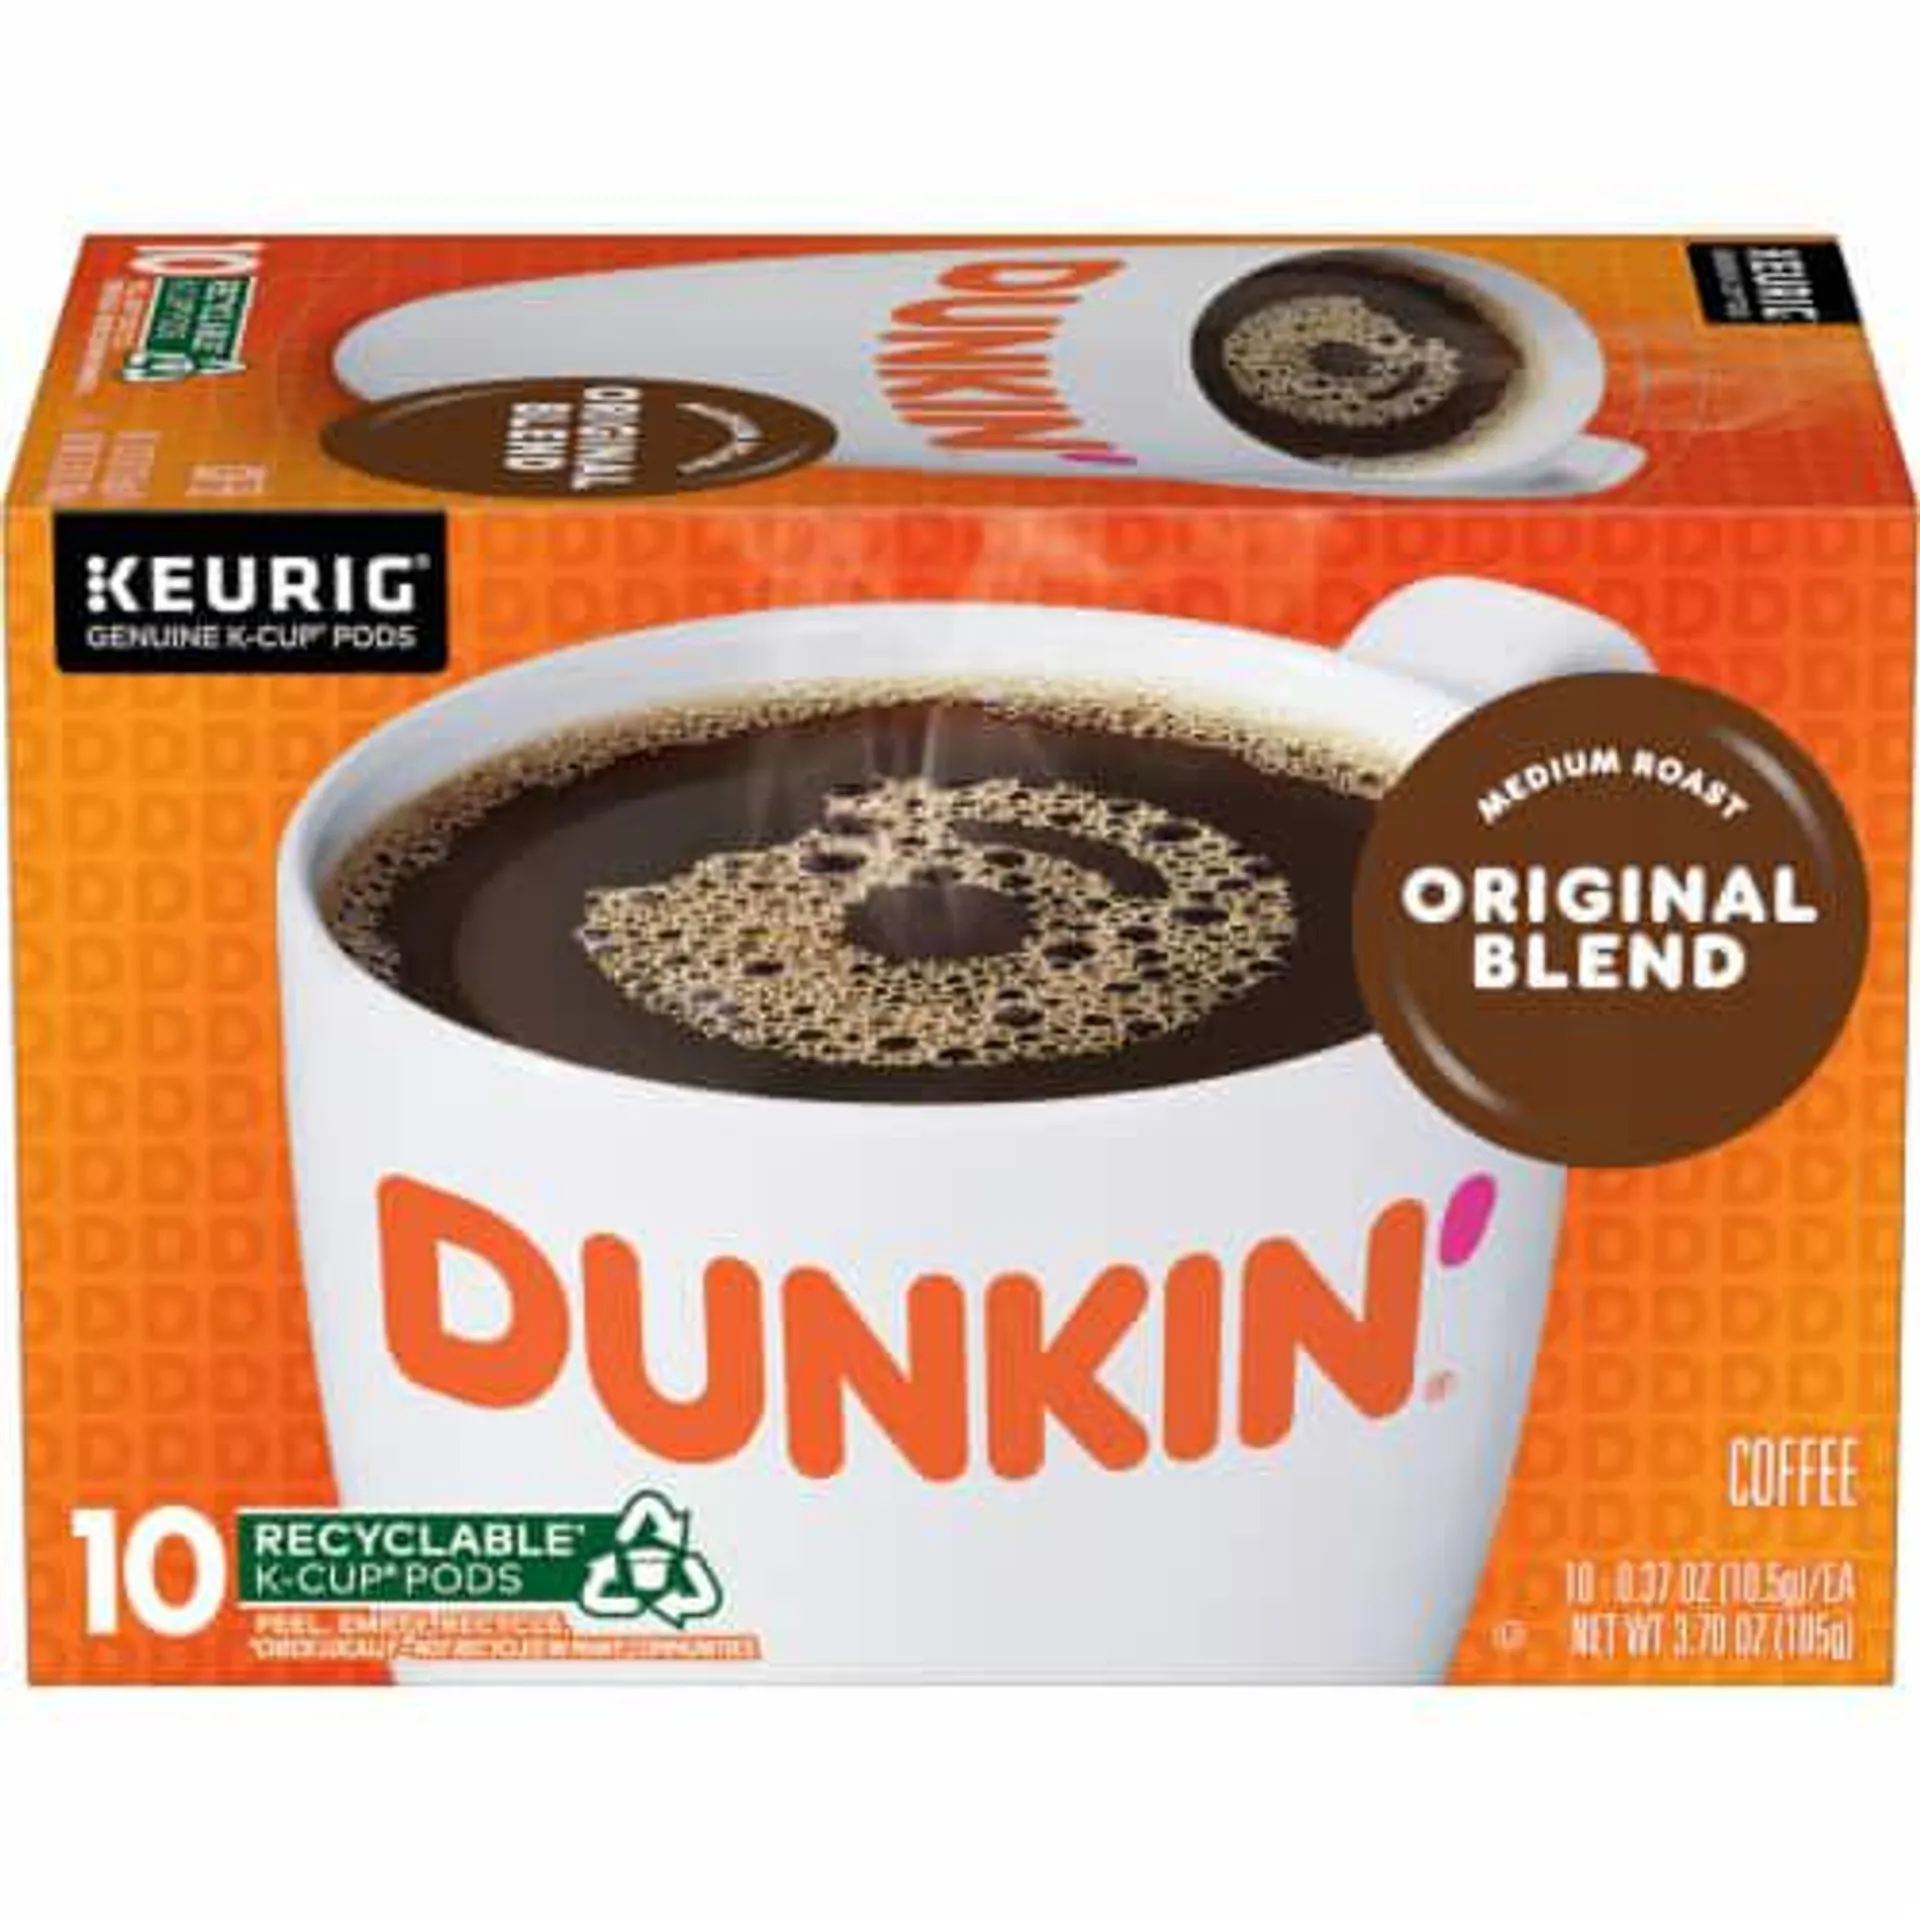 Dunkin'® Original Blend Medium Roast K-Cup Coffee Pods